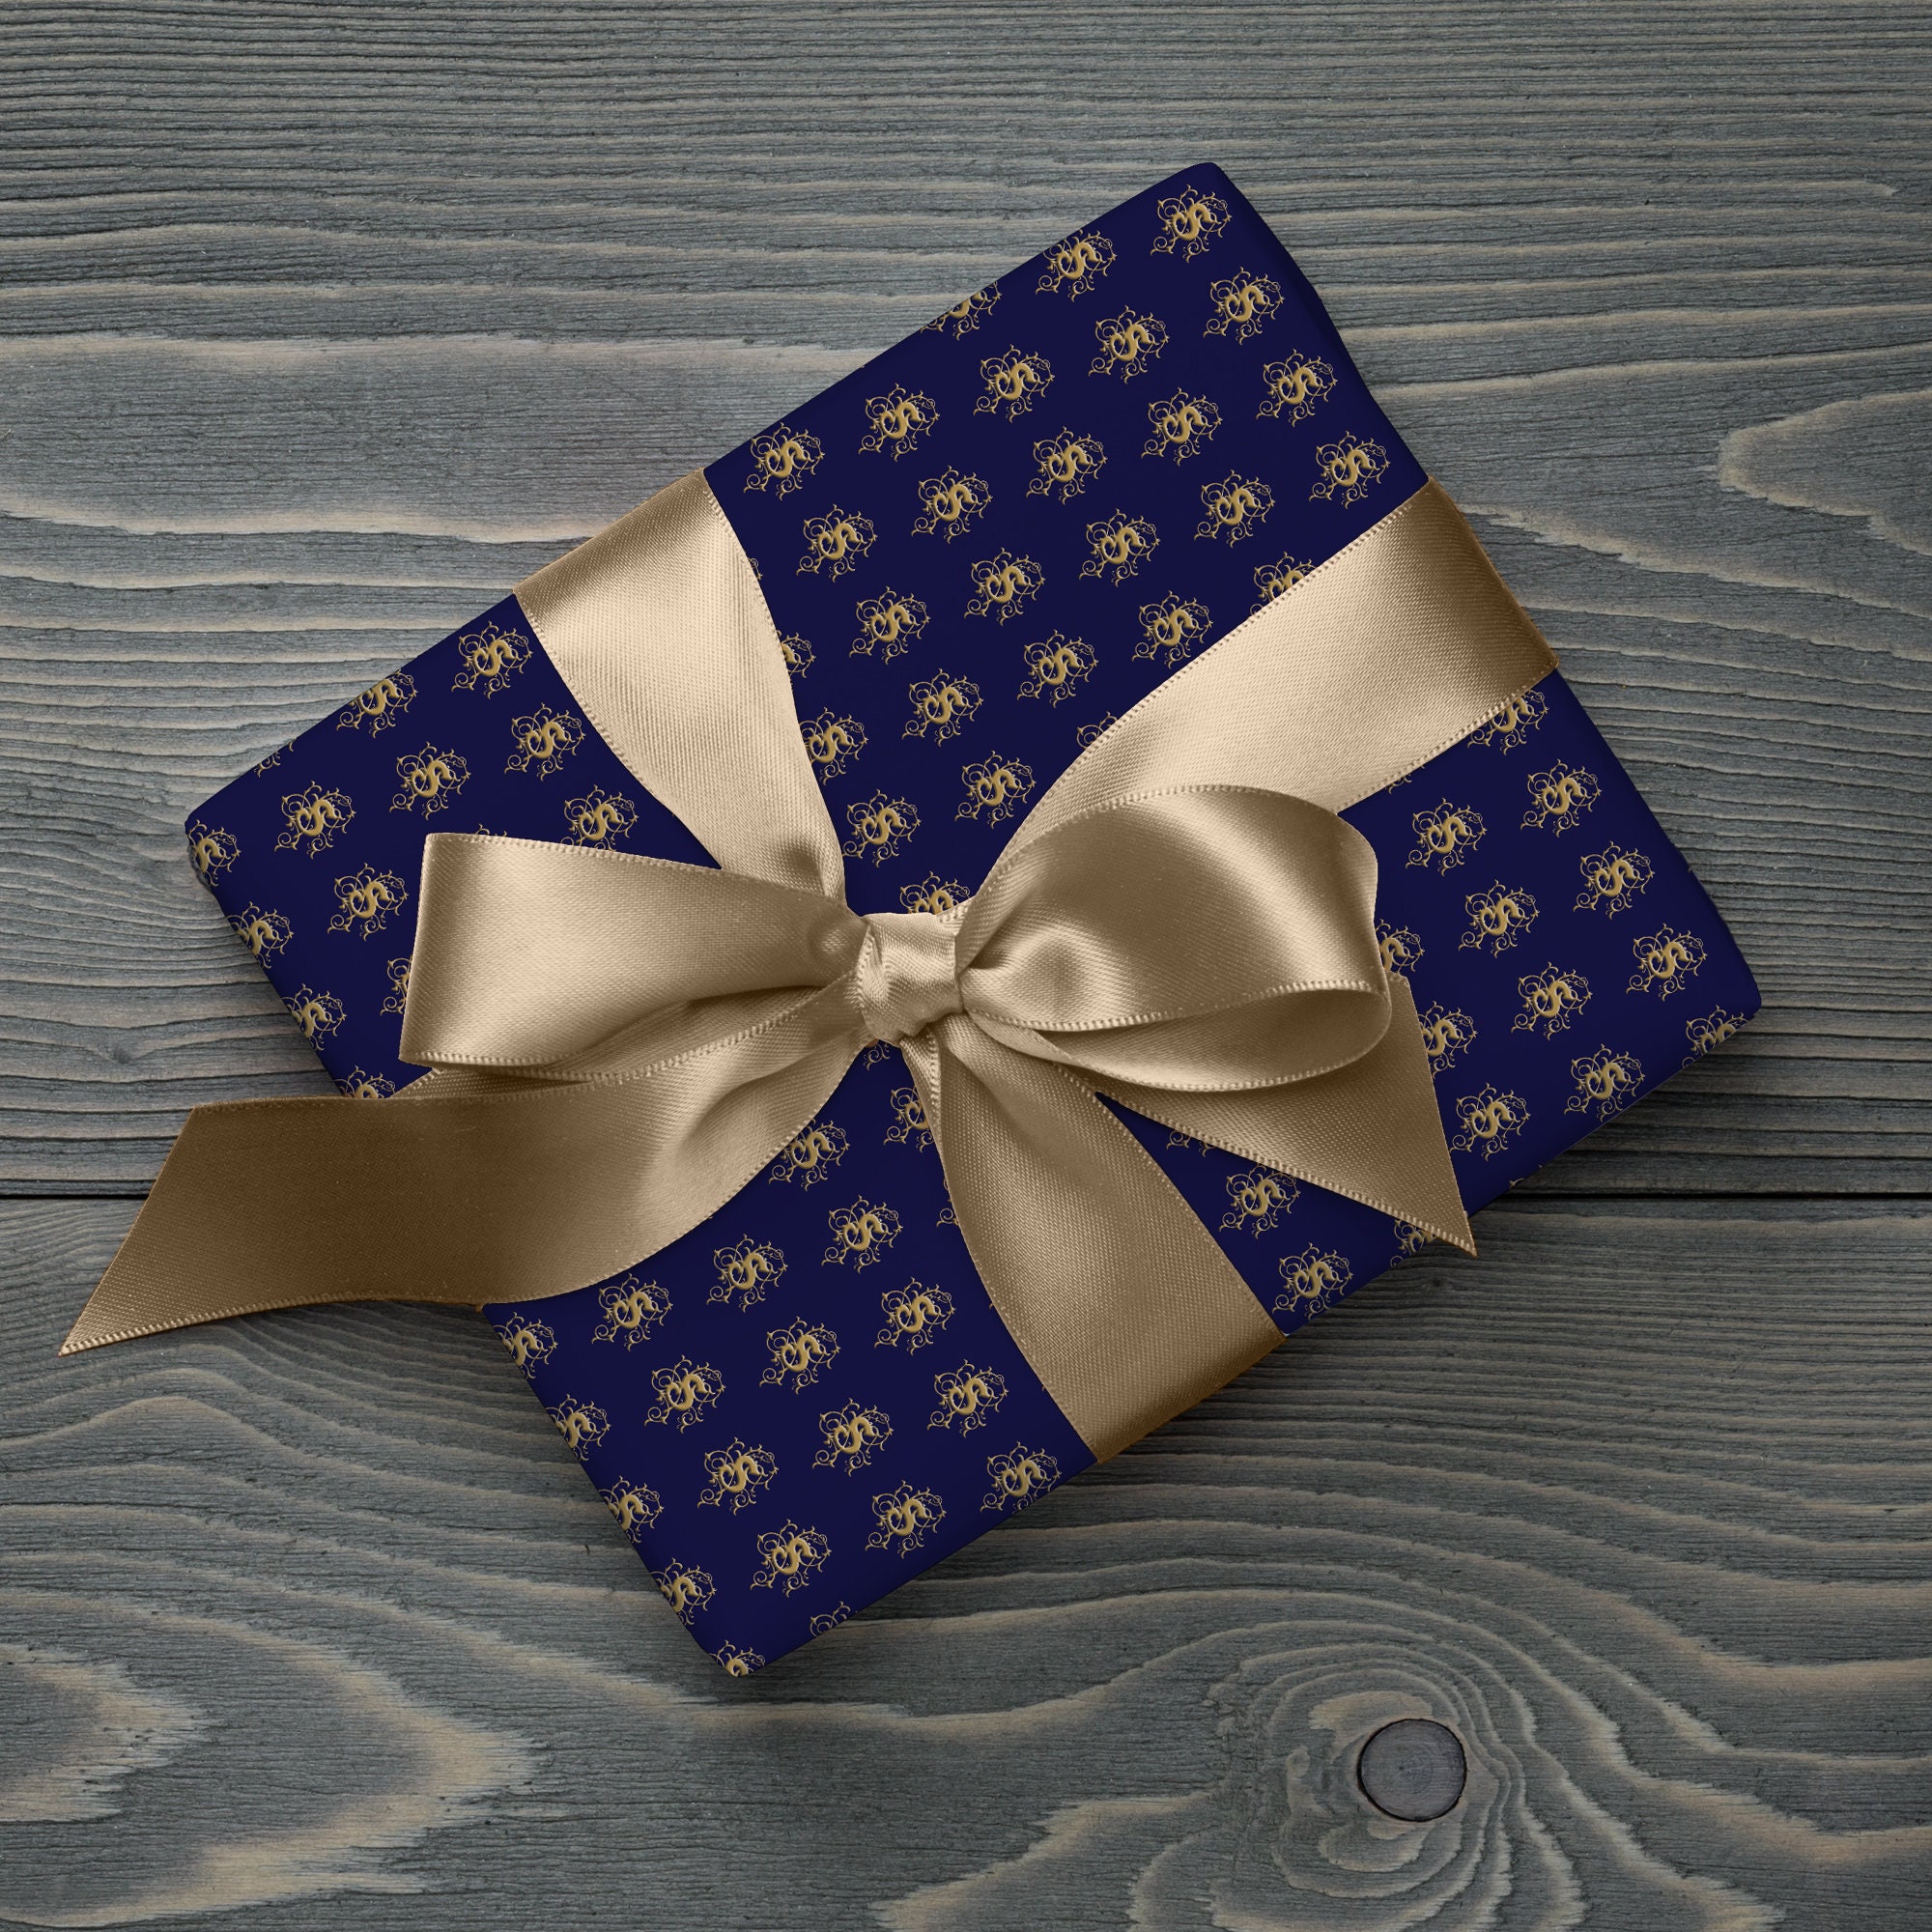 Elegant Gift Wrap Gold Monogram Filigree Navy Blue Wrapping Paper Sheets  Beauty Beast Wedding Shower Bridal Unique Present Elegant Birthday 